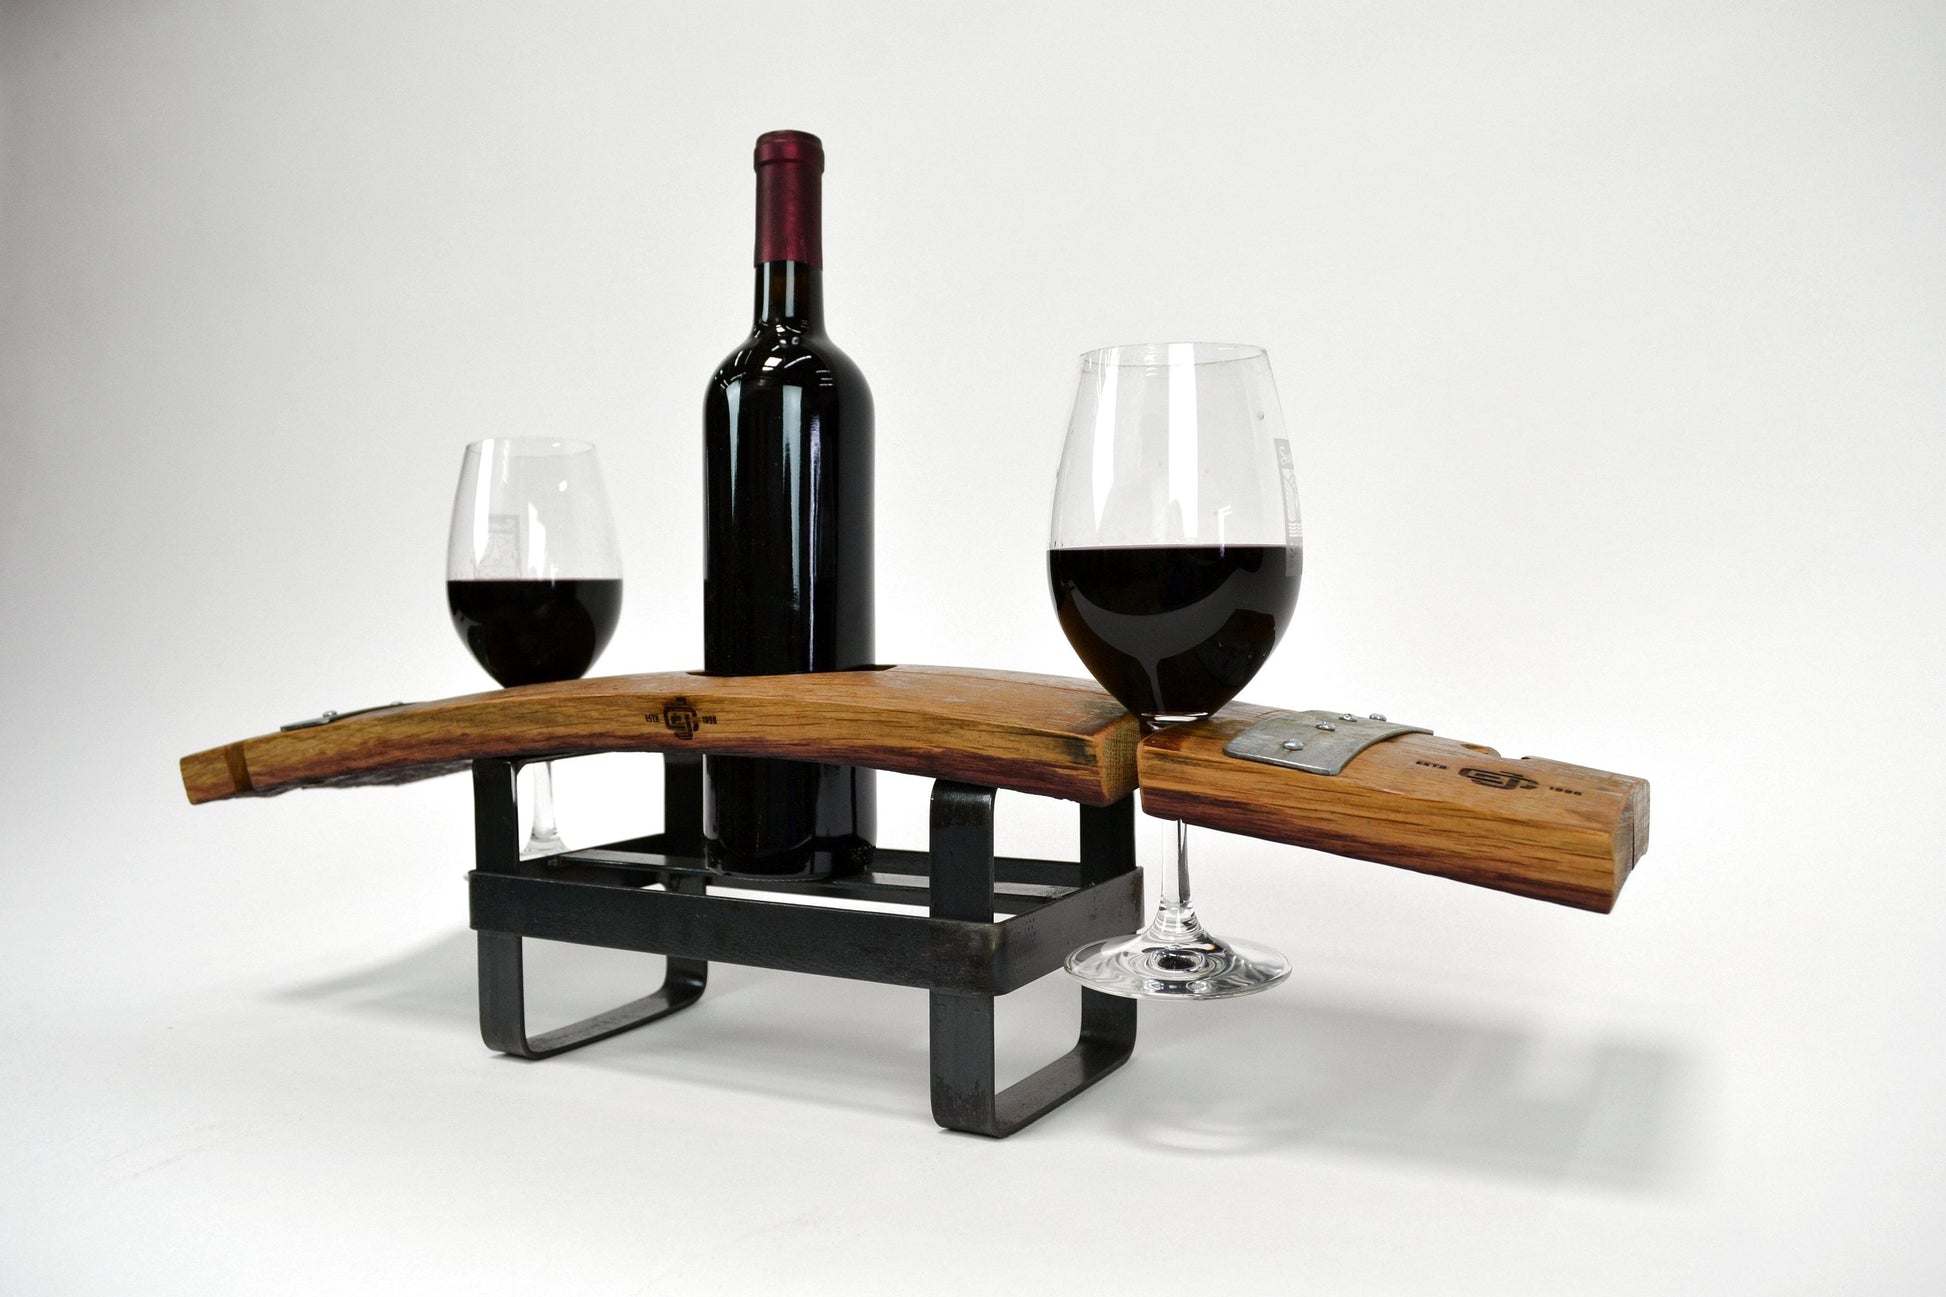 Barrel Stave and Steel Wine Flight - Zabibu - 4 glass wine flight and bottle stand. 100% Recycled!